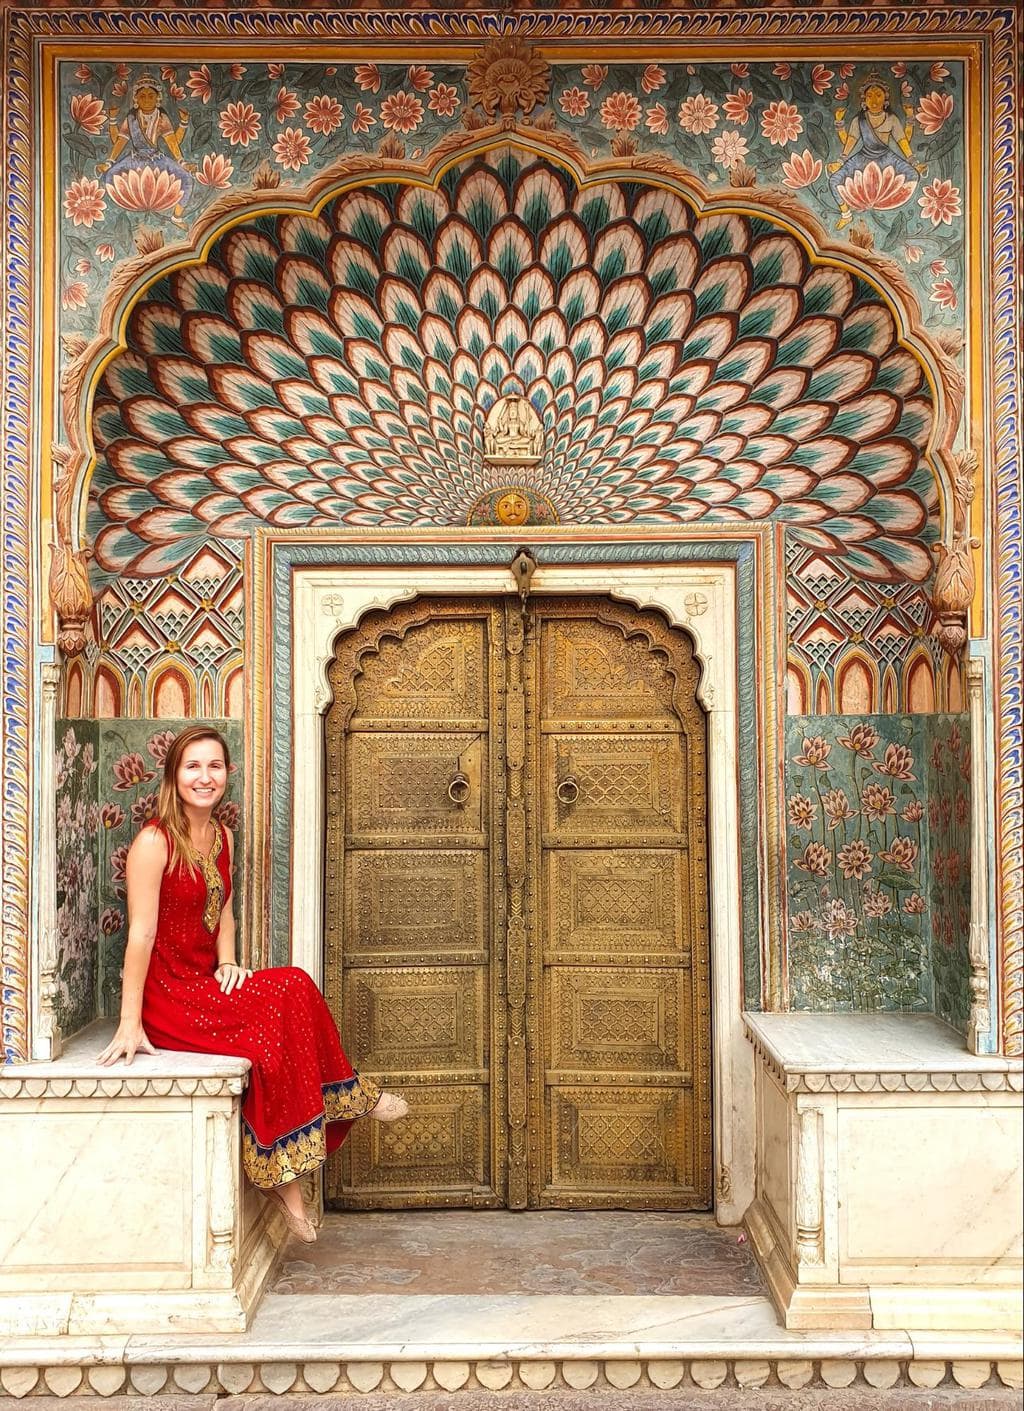 The beautiful gates at Jaipur’s City palace 02